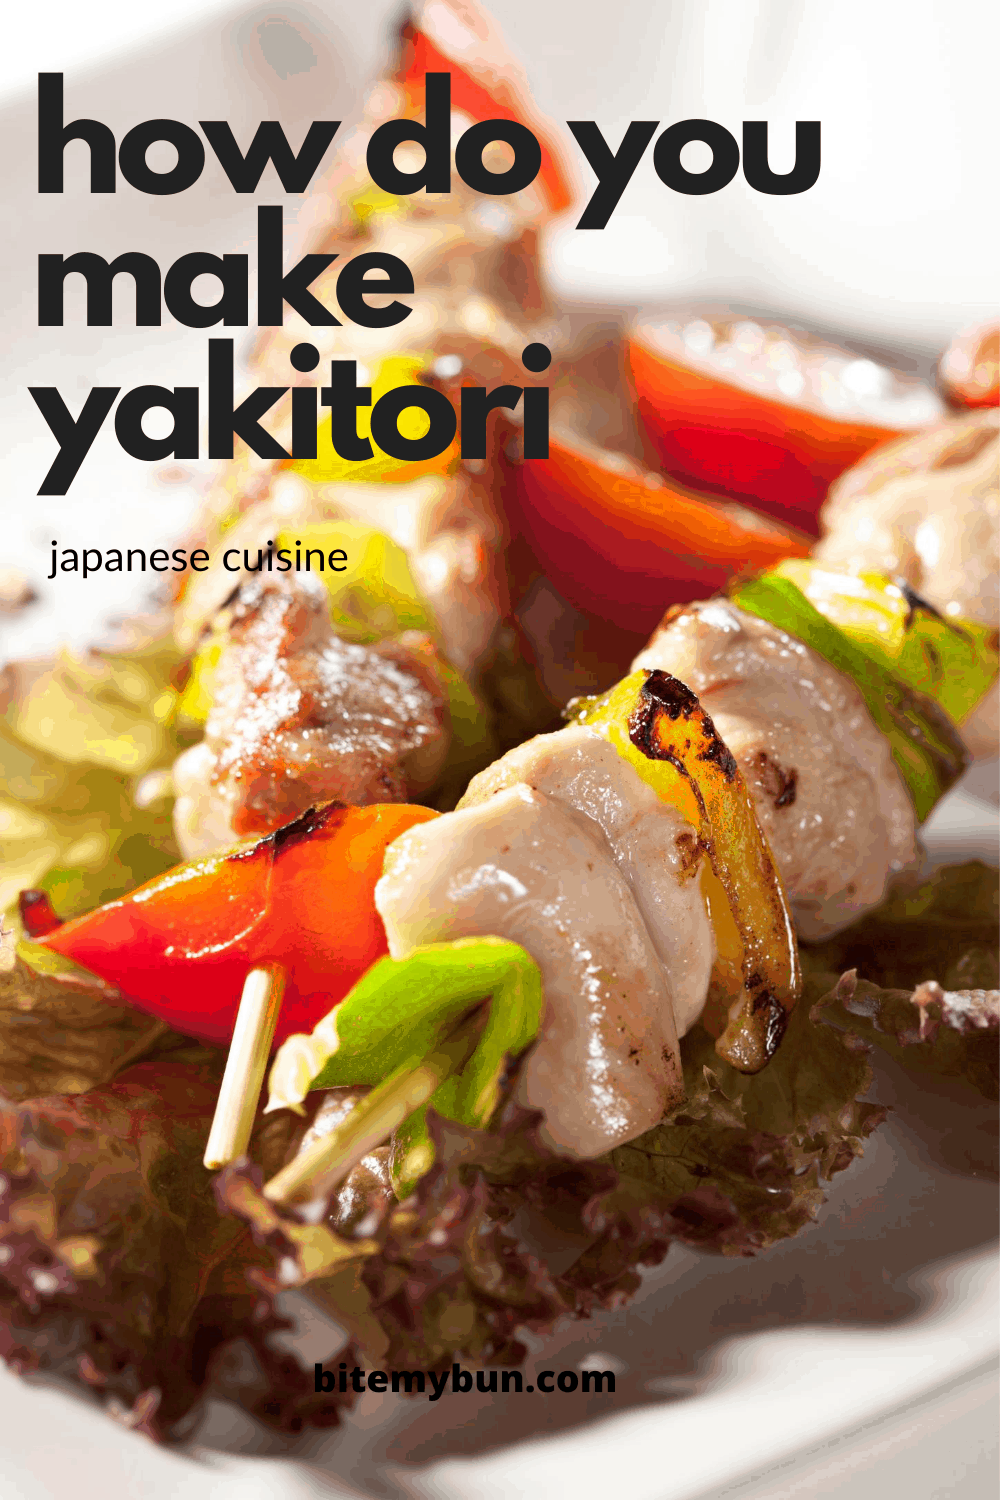 How do you make yakitori